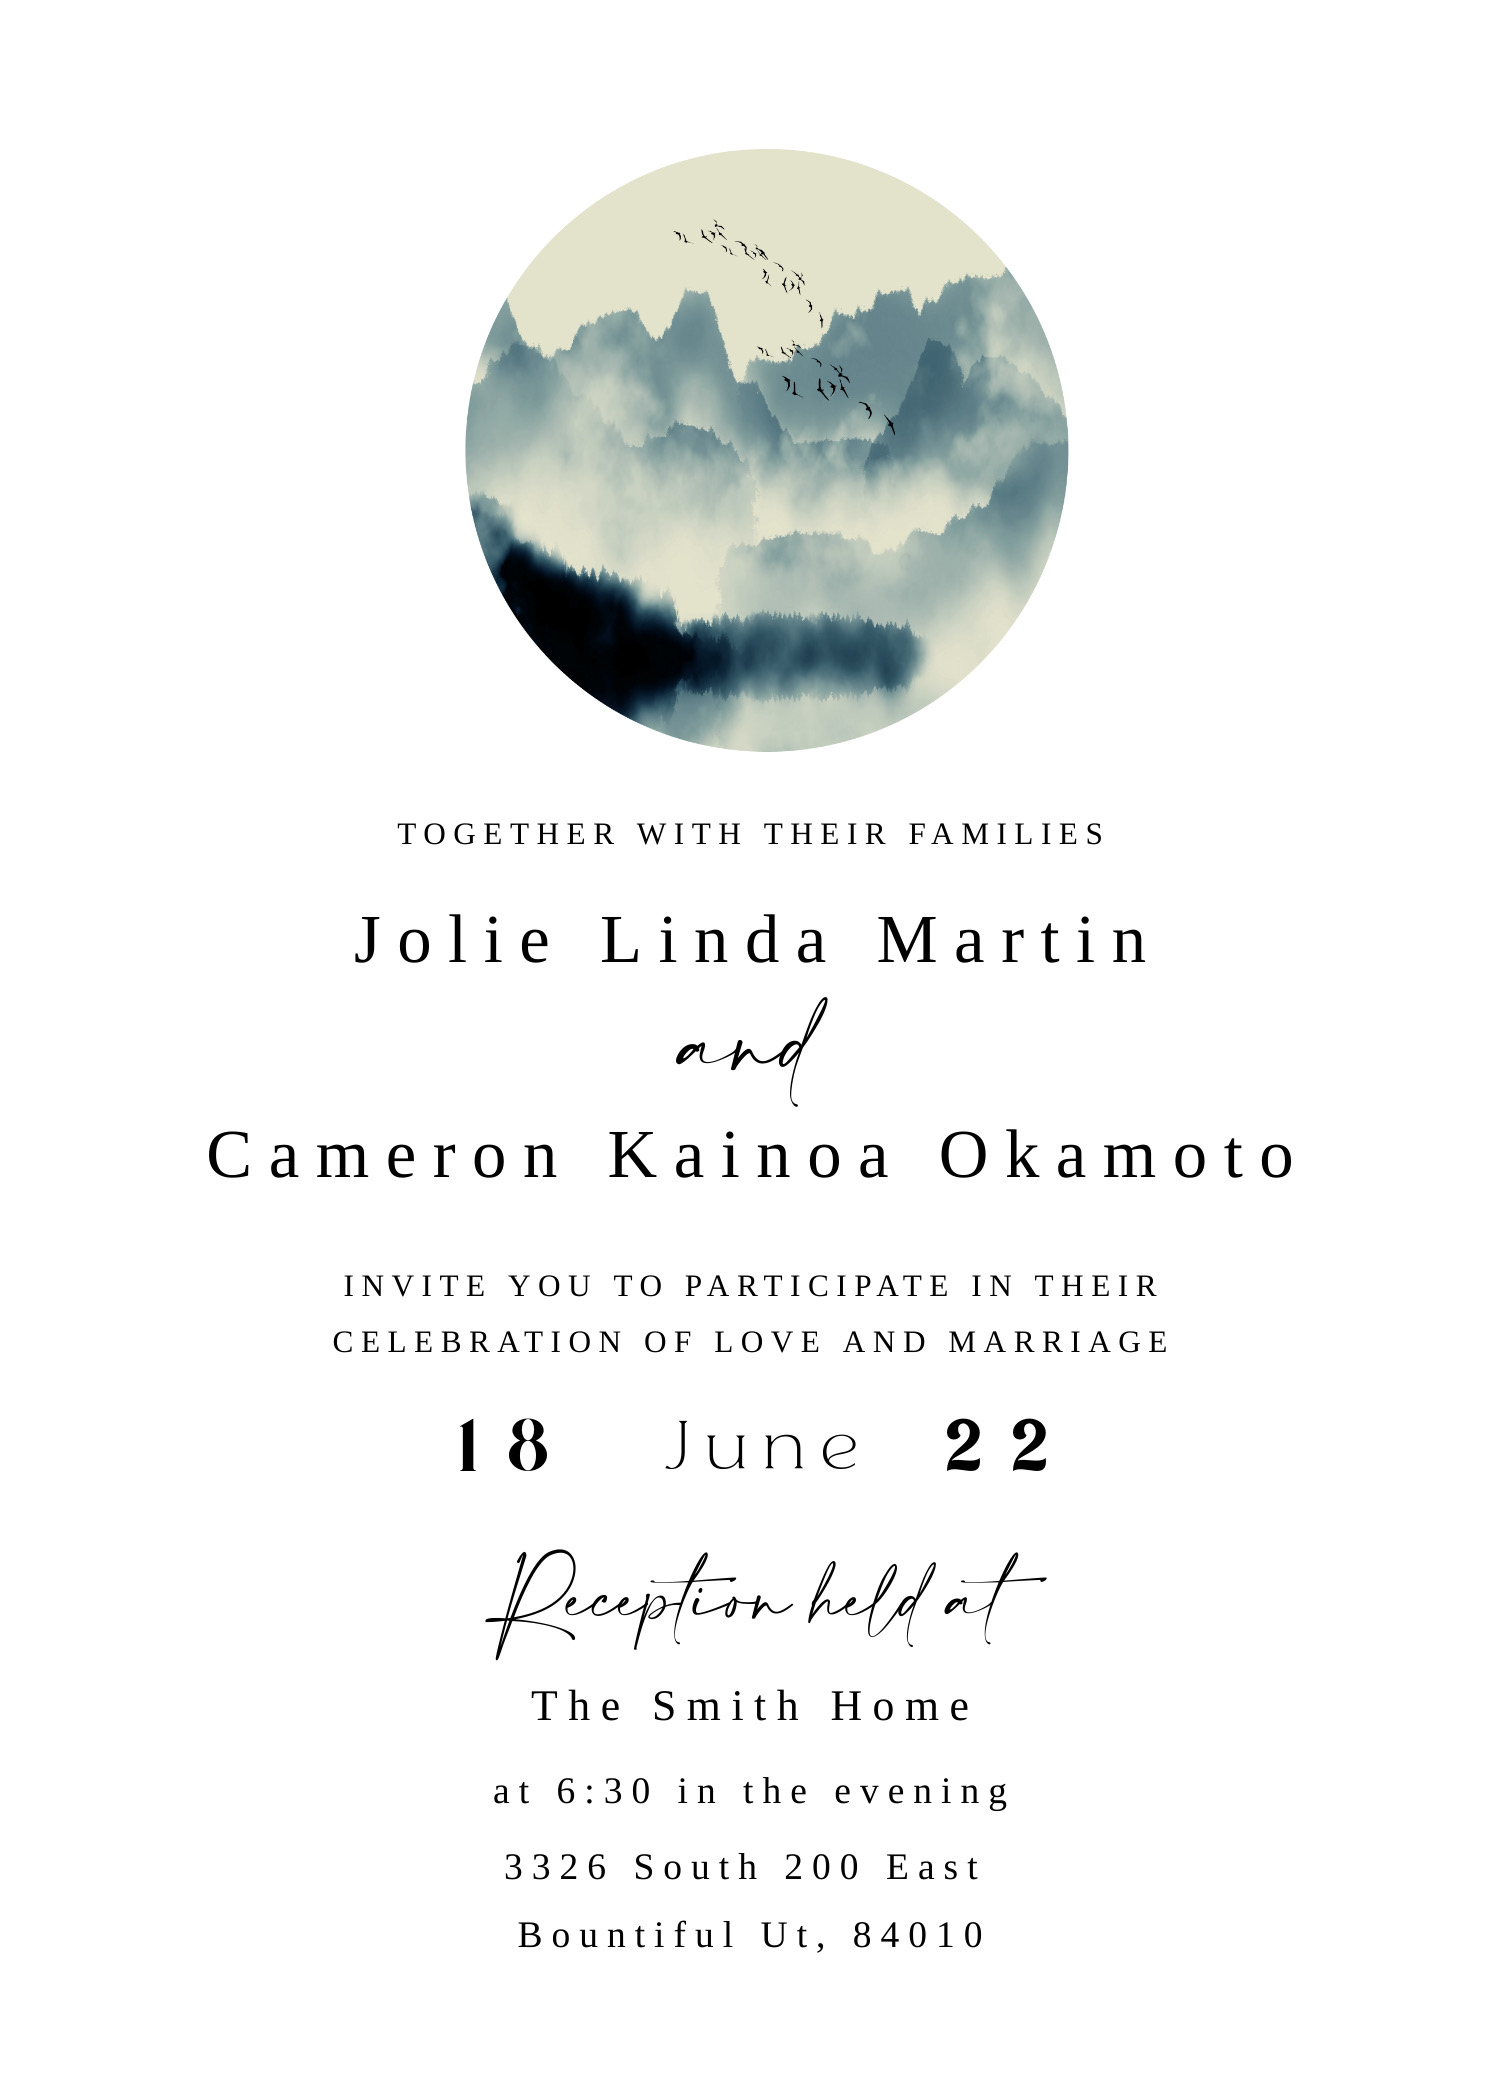 Jolie's wedding reception invitation